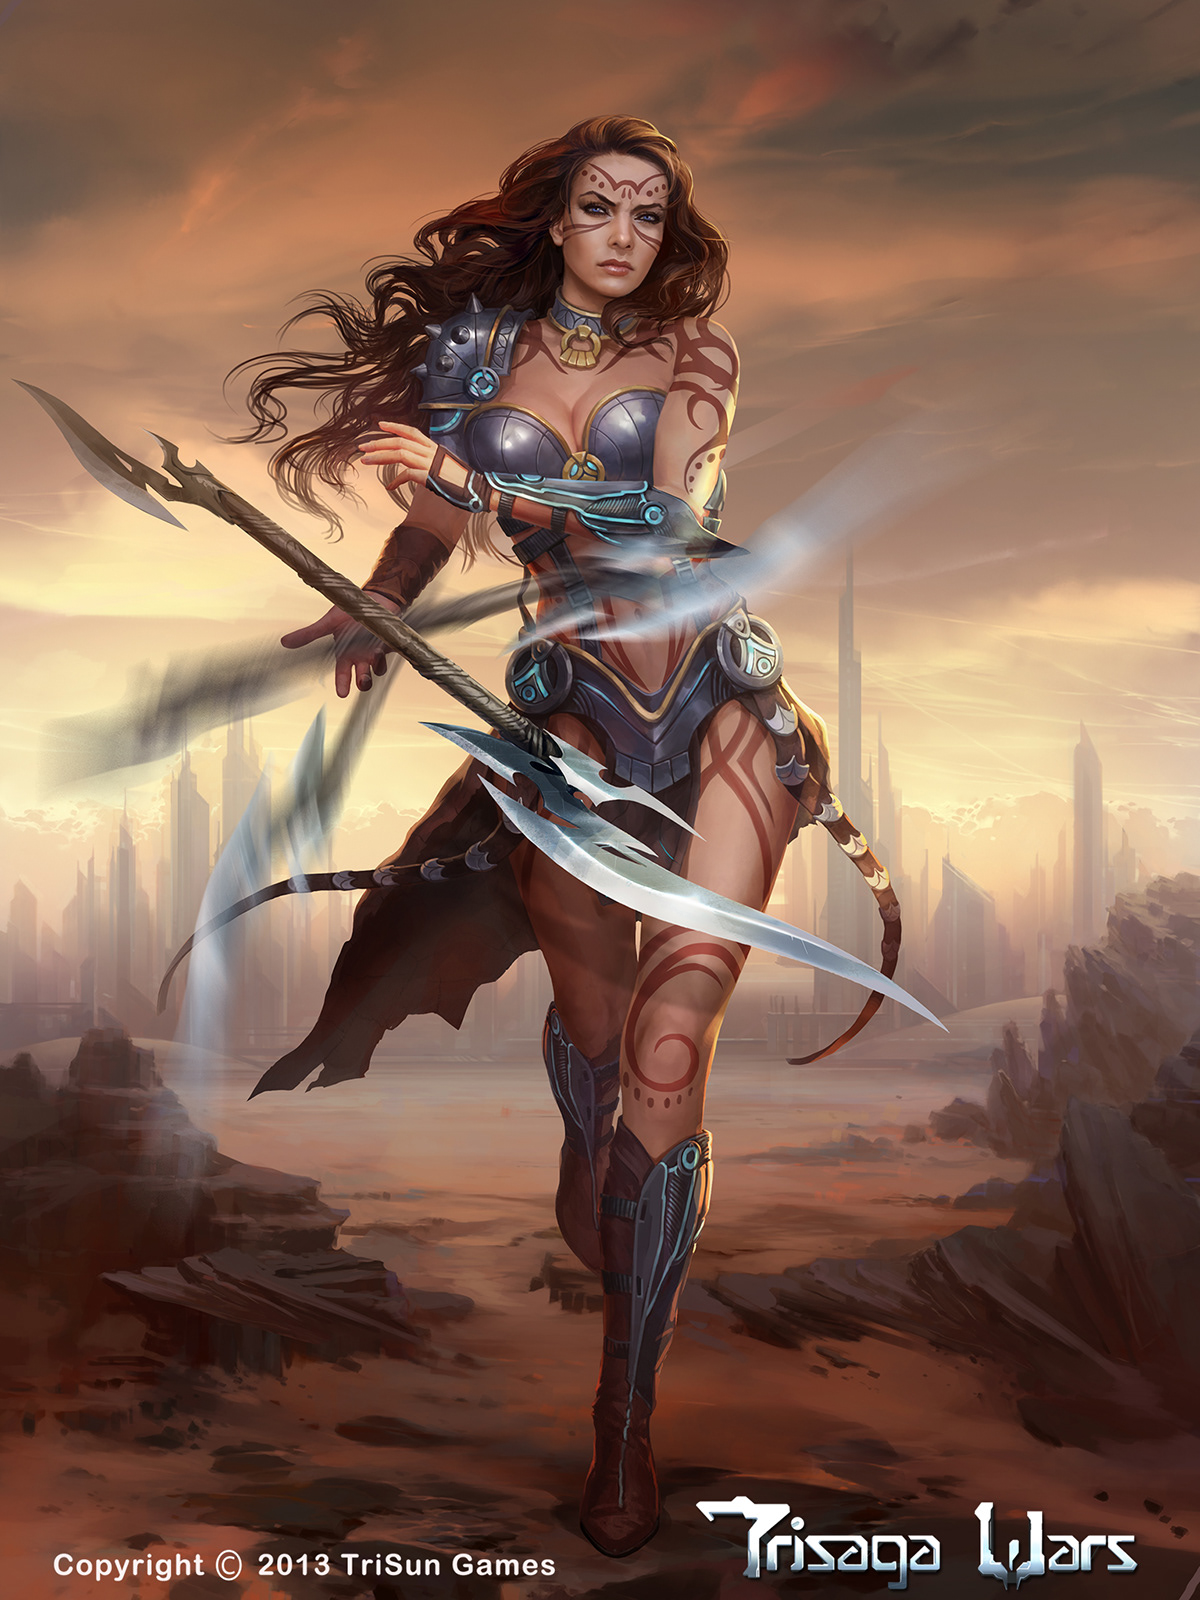 Trisaga Wars woman fantasy